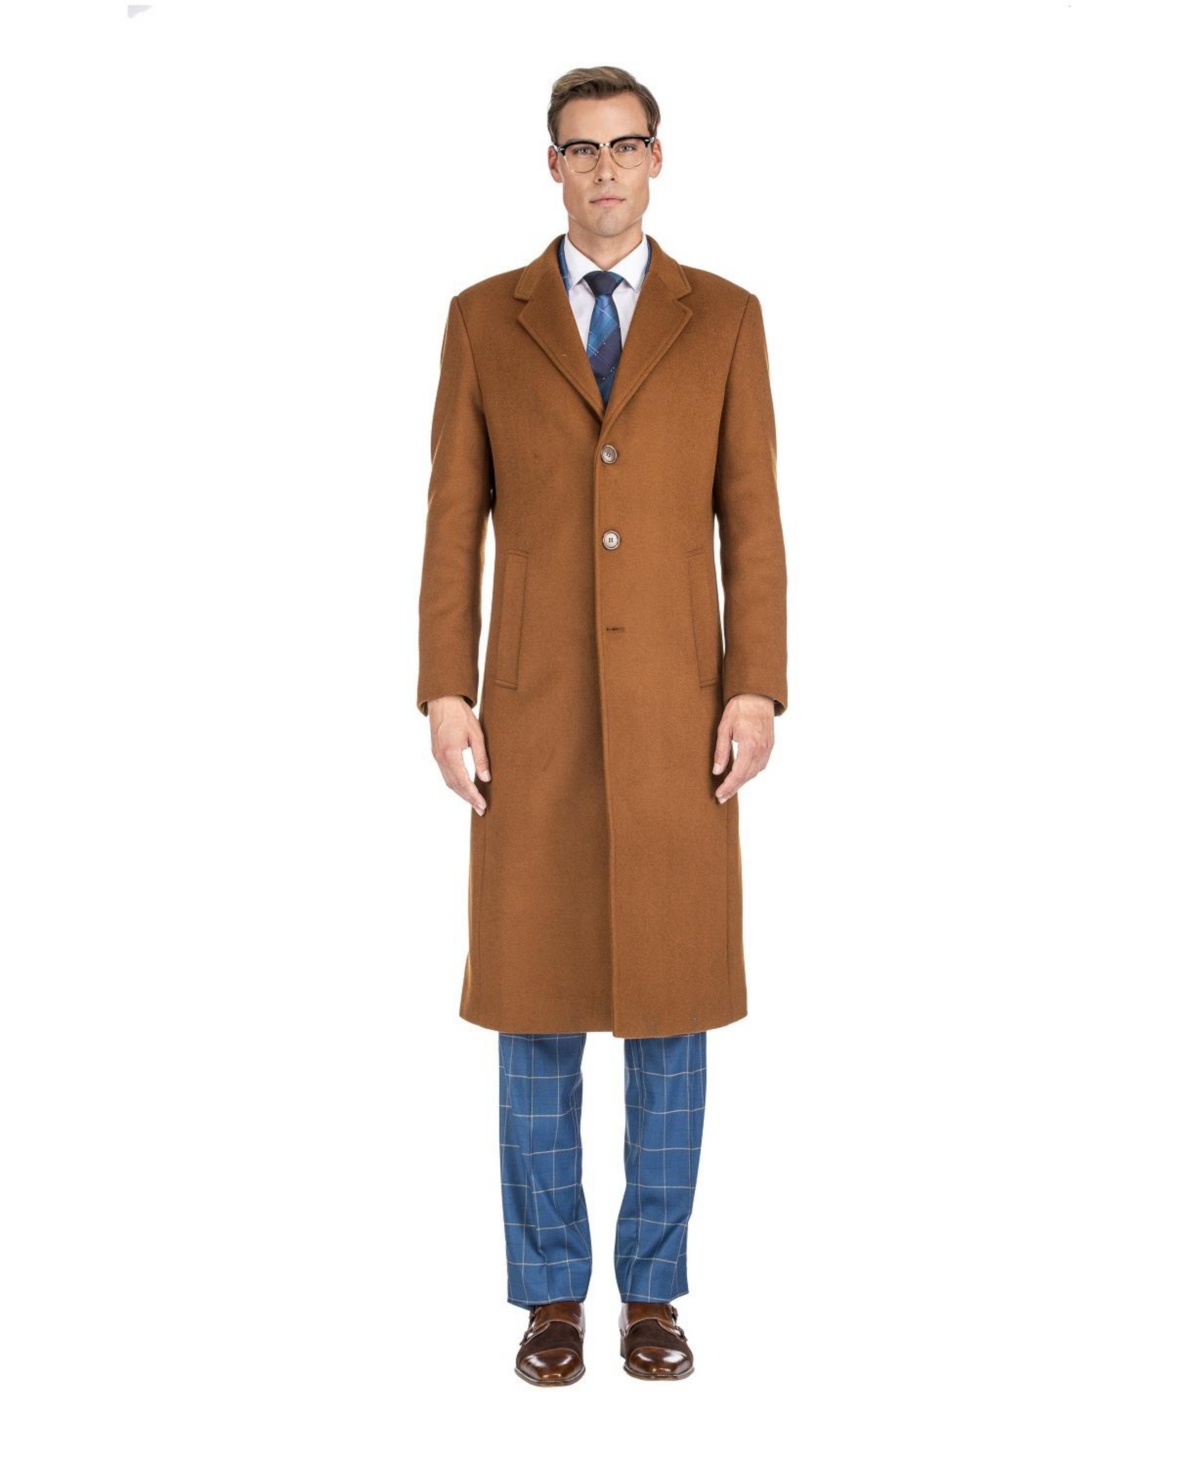 Men's Knee Length Wool Blend Three Button Long Jacket Overcoat Top Coat - Charcoal